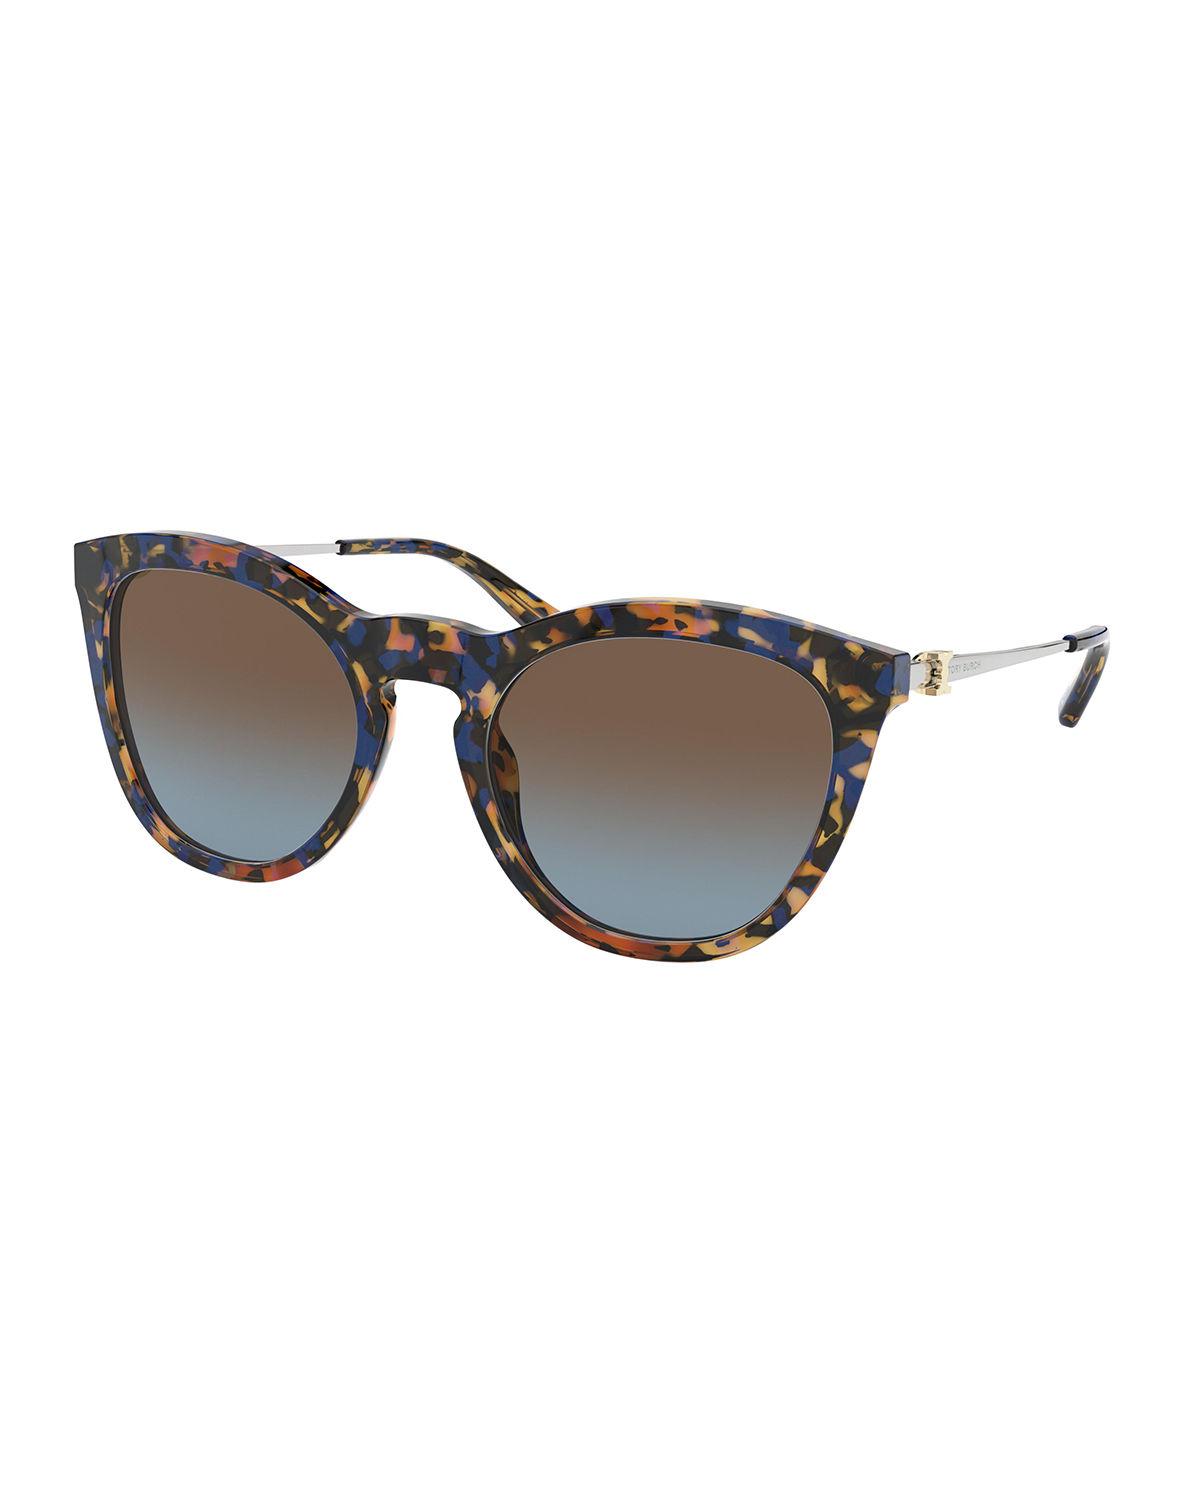 Lyst - Tory Burch Cat-eye Gradient Acetate & Metal Sunglasses in Blue